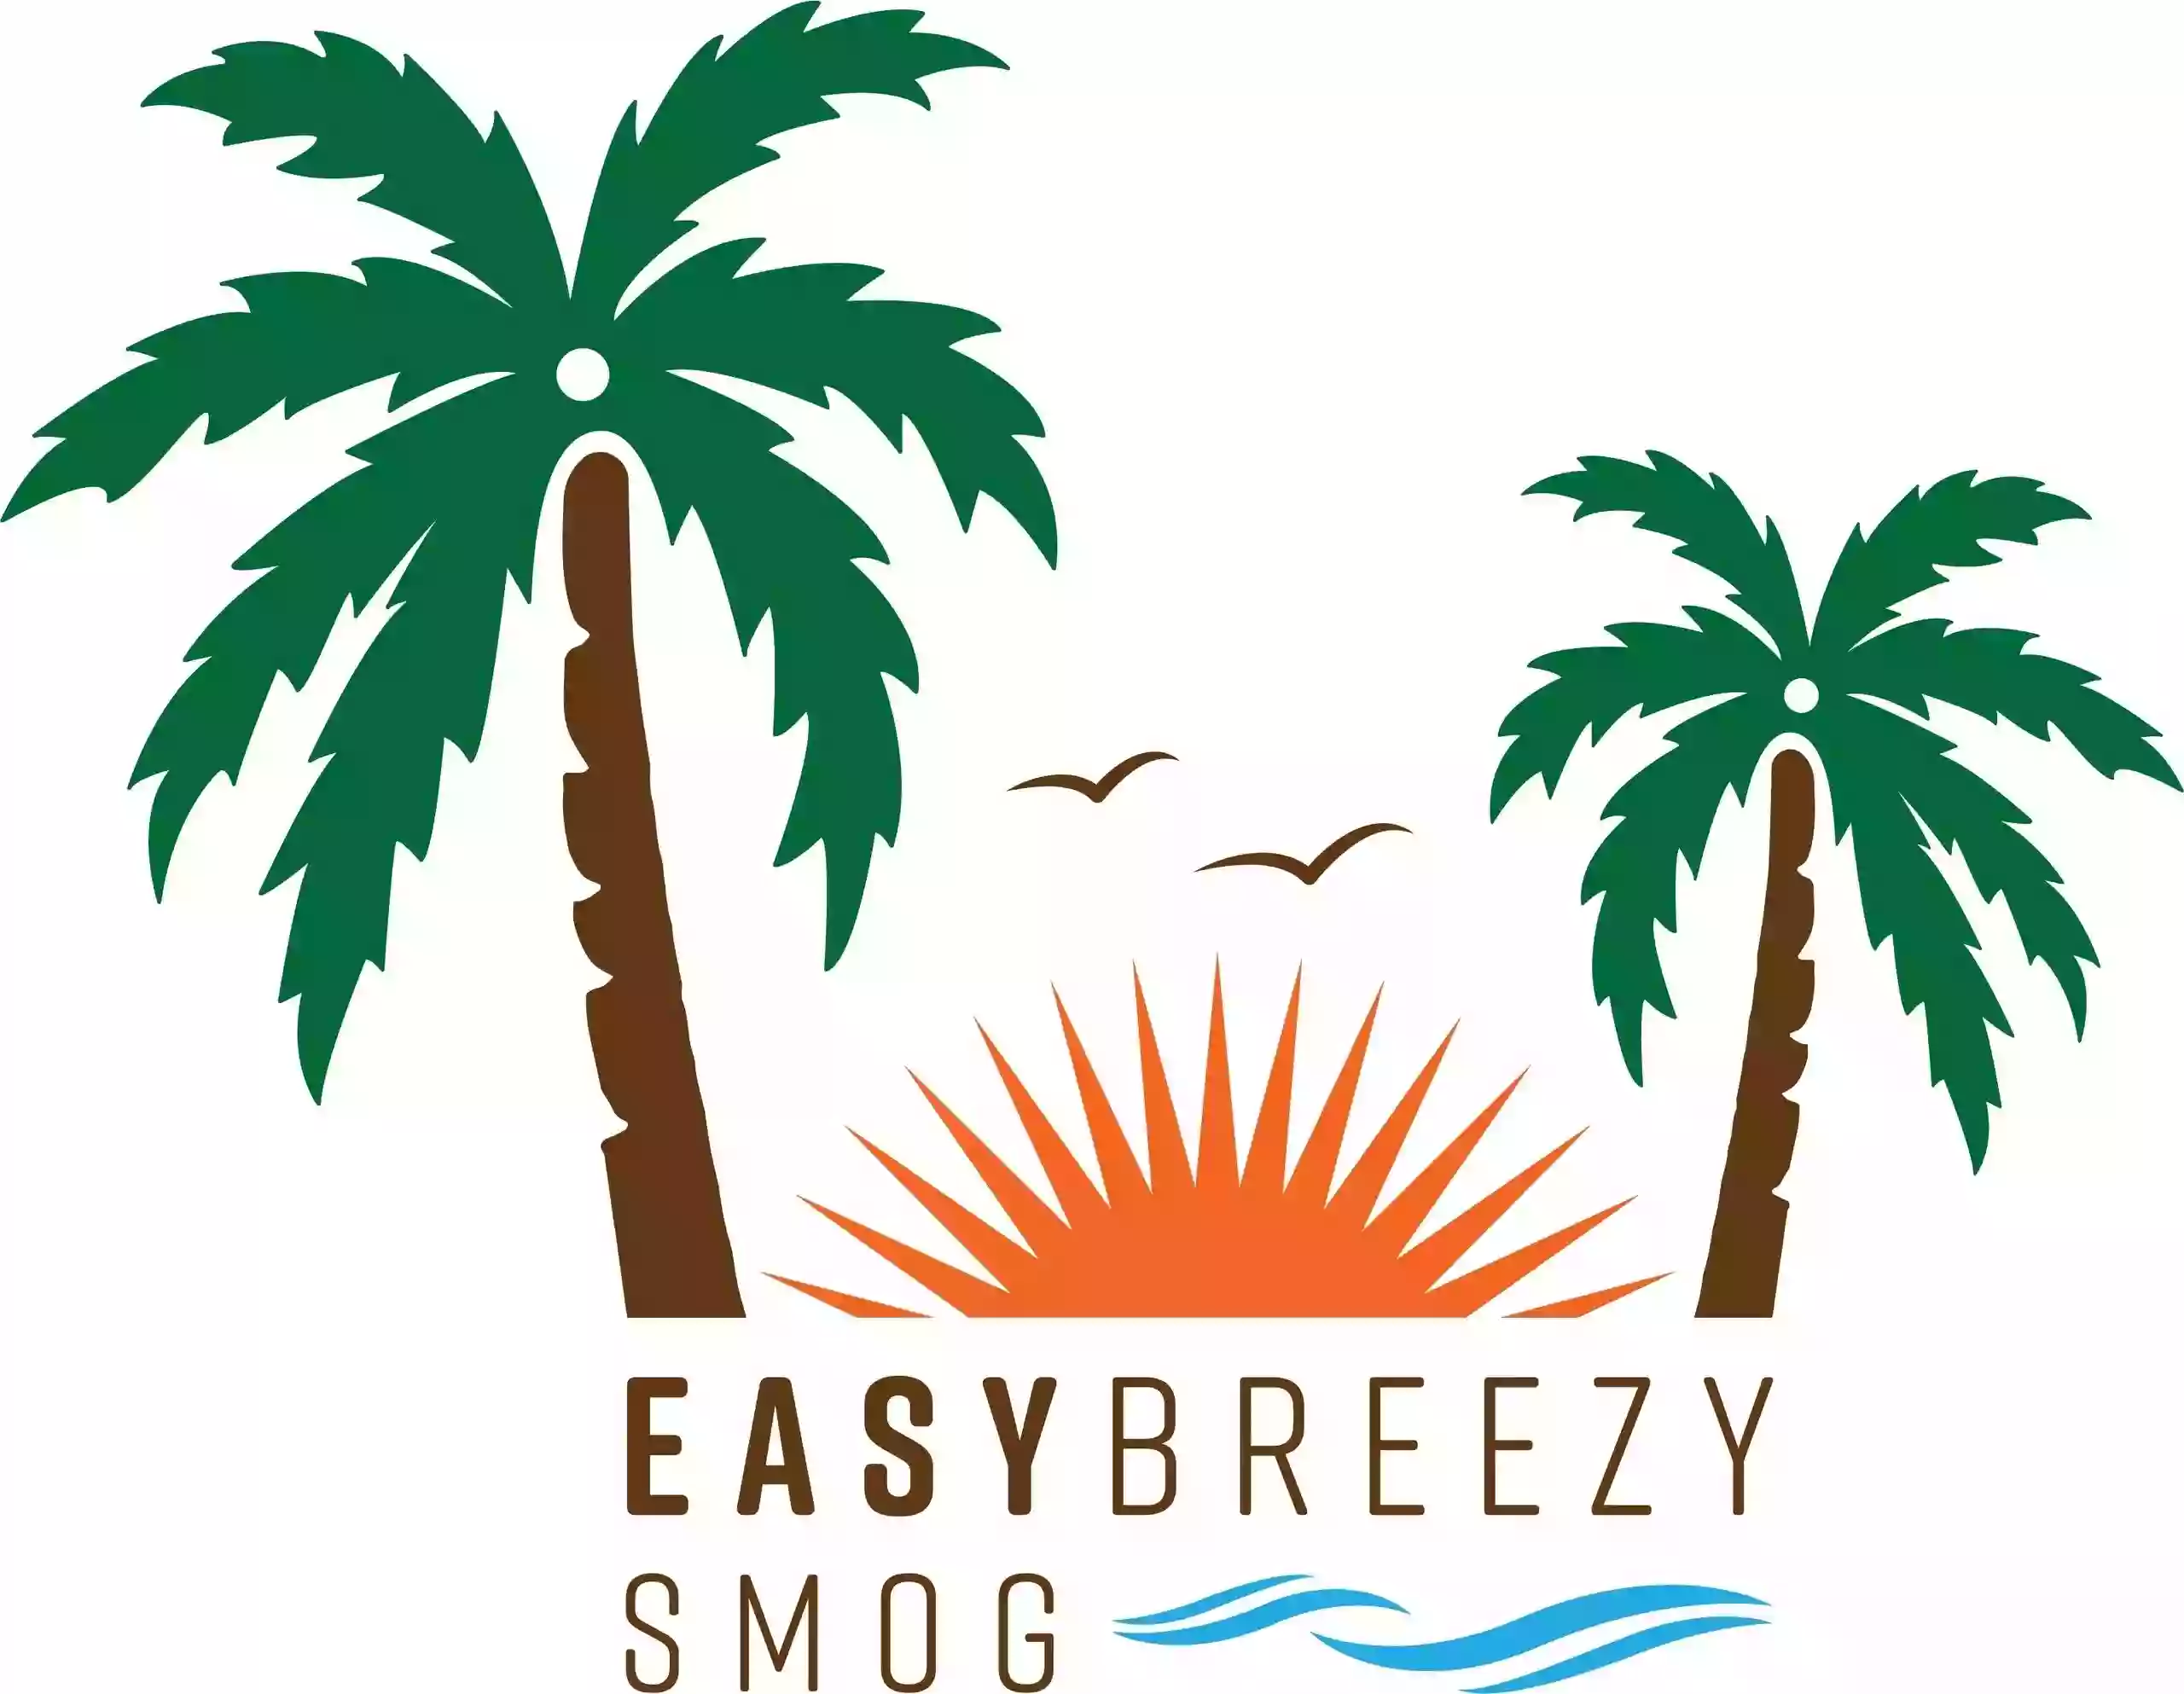 Easy Breezy Smog